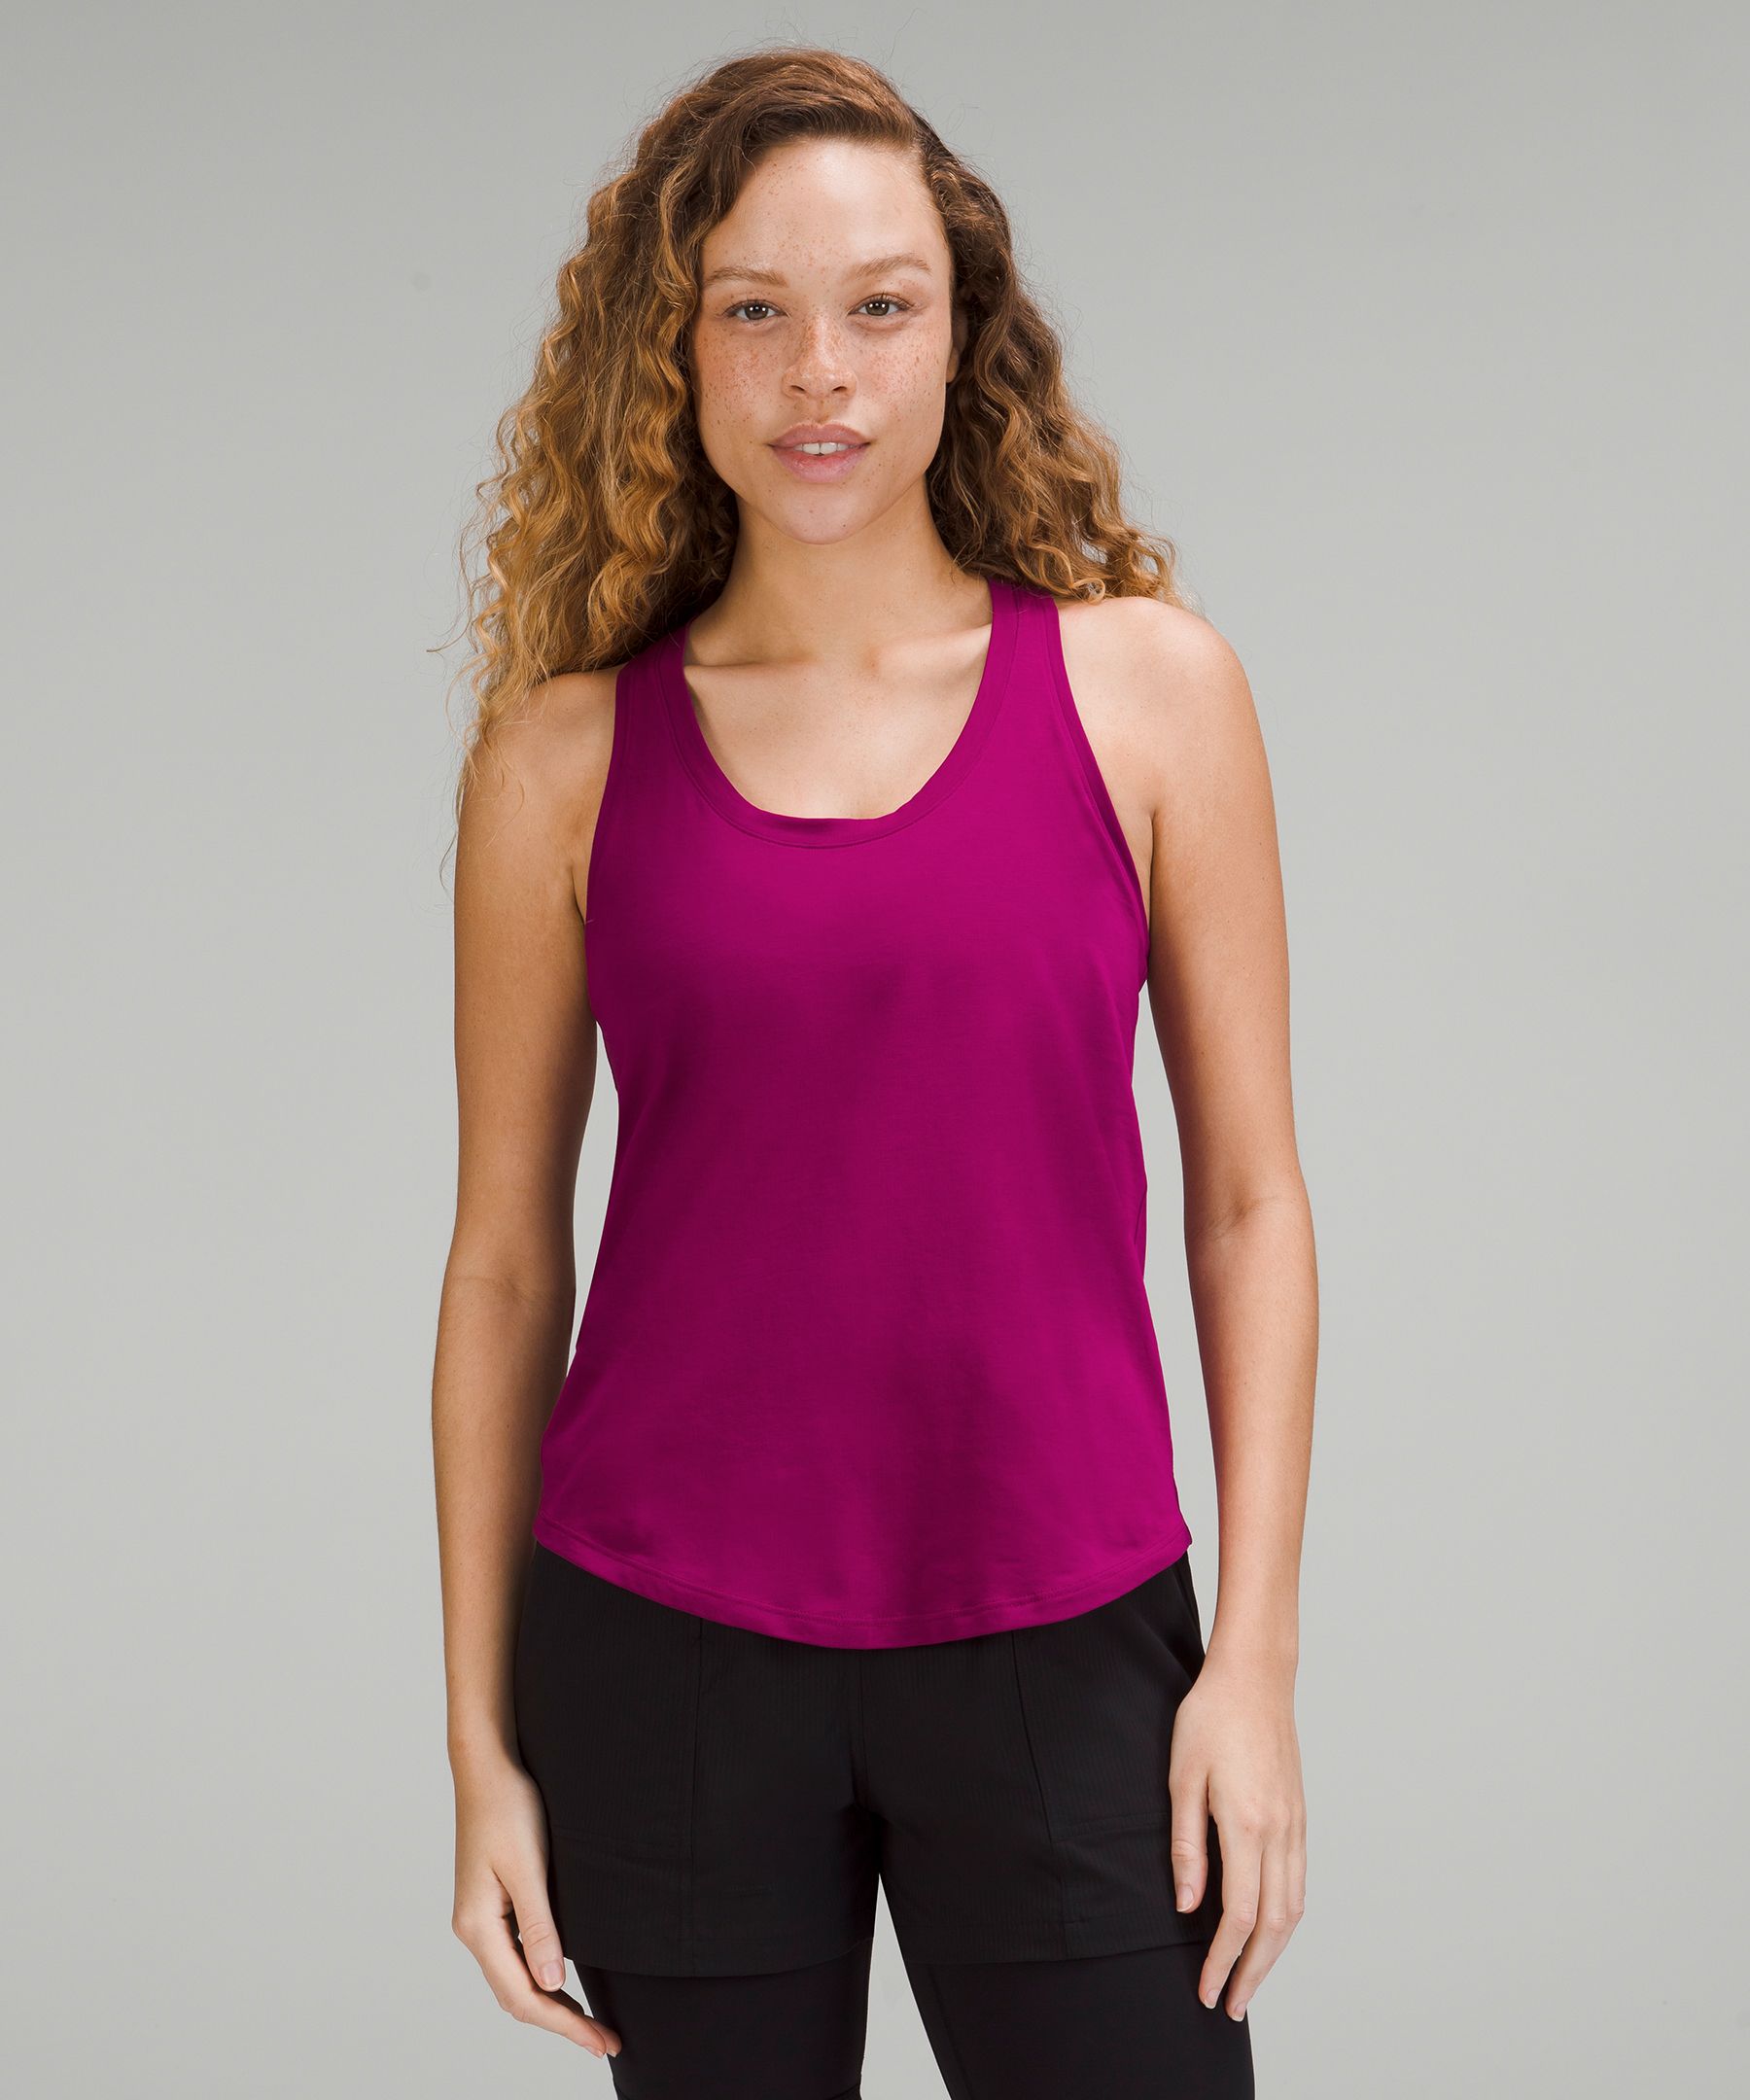 Yoga T Shirt Design Online Calculator